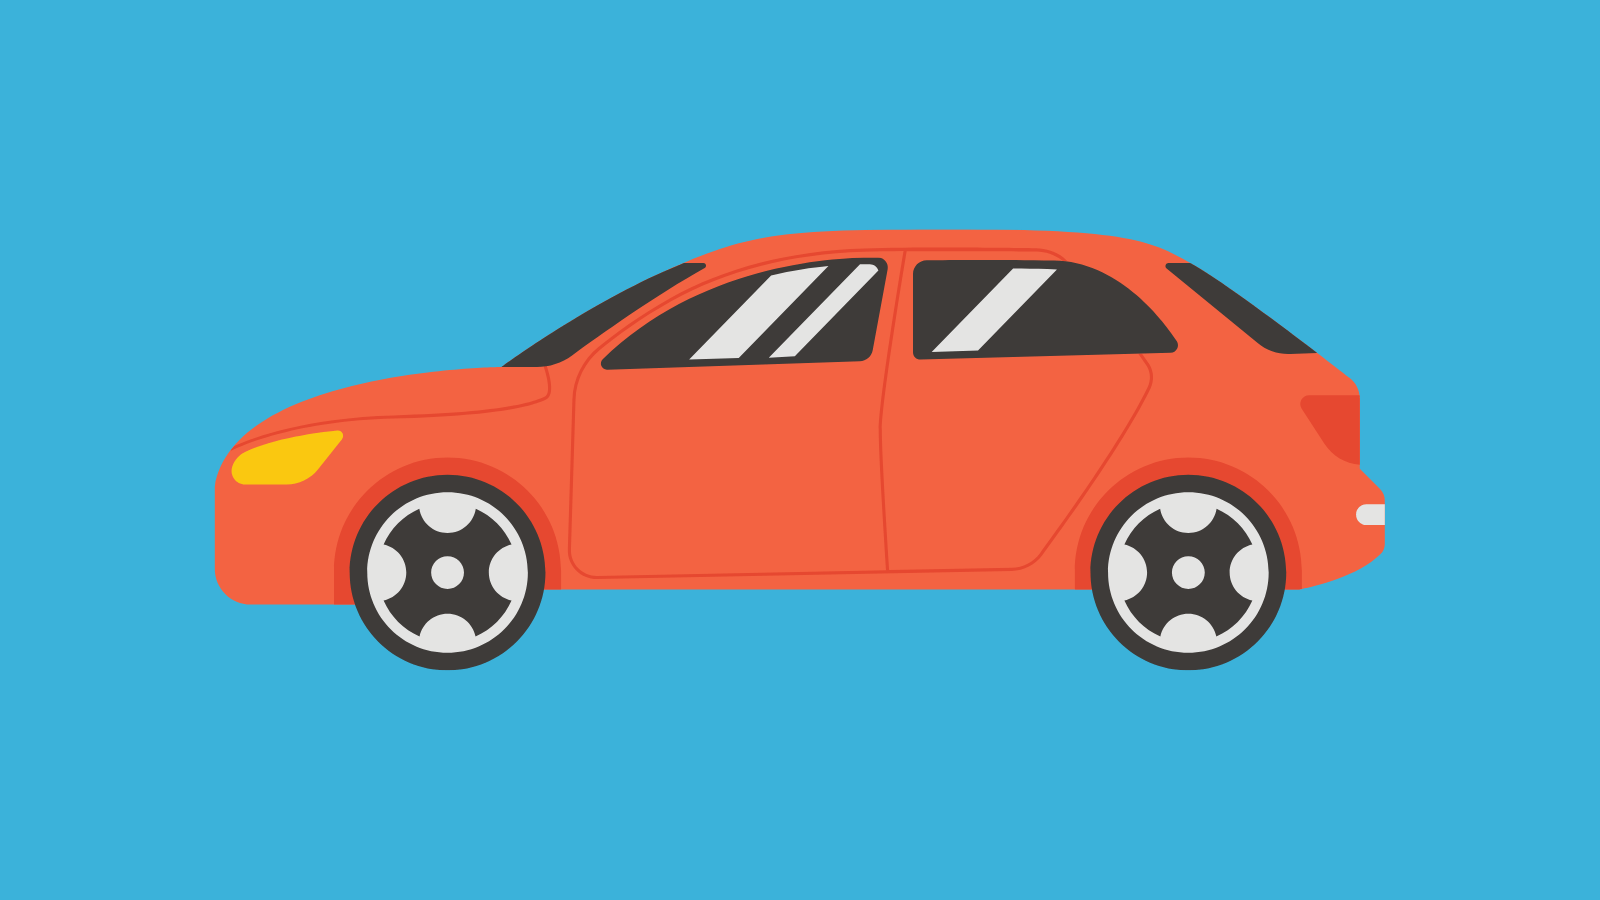 A small orange car